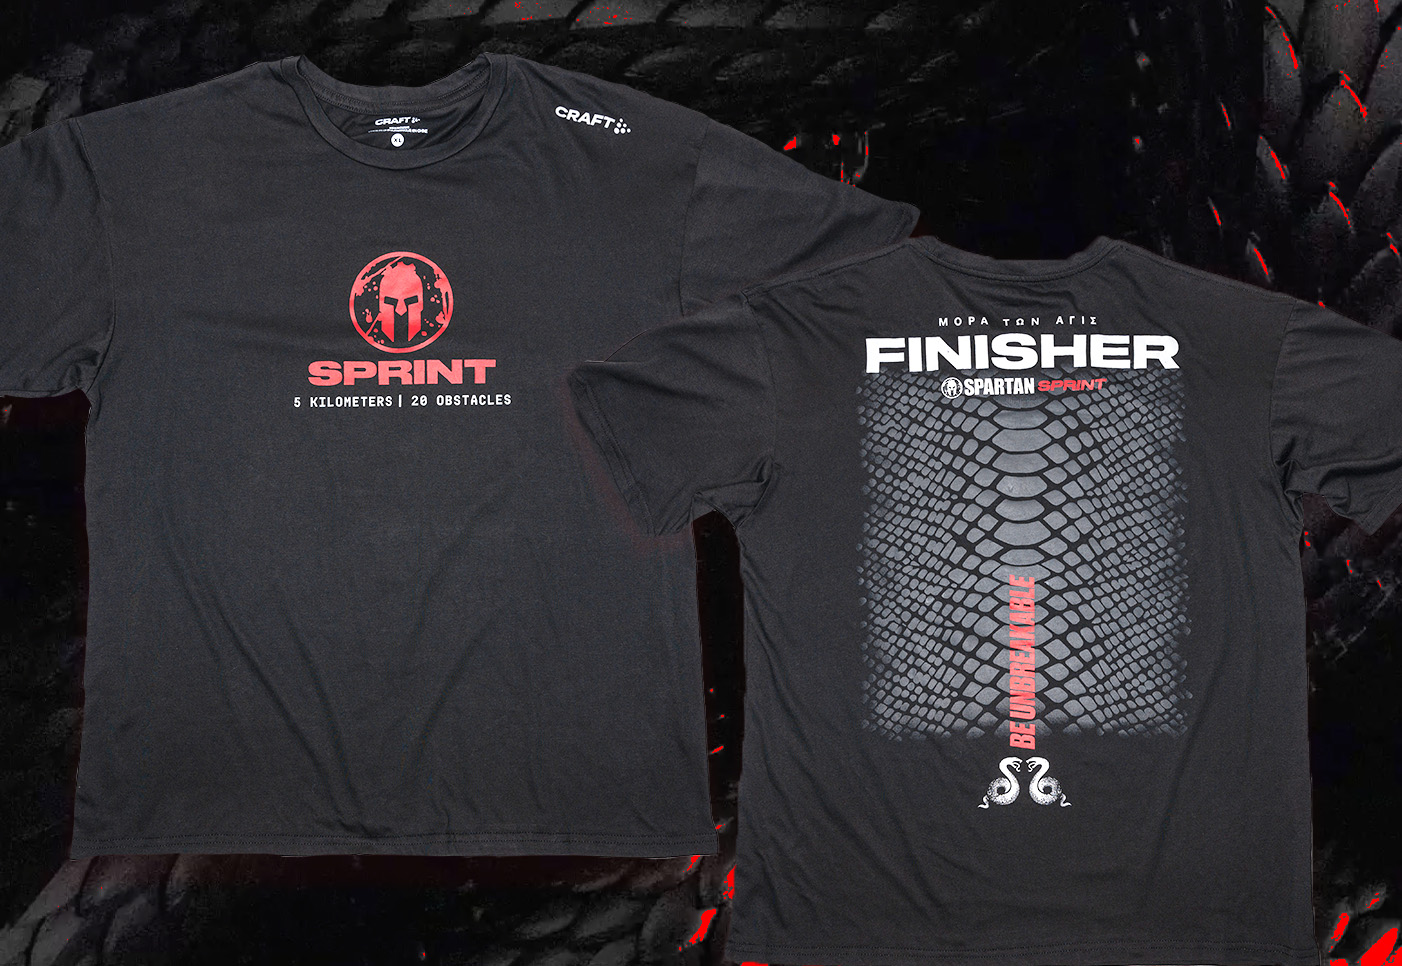 Finisher’s T-shirt